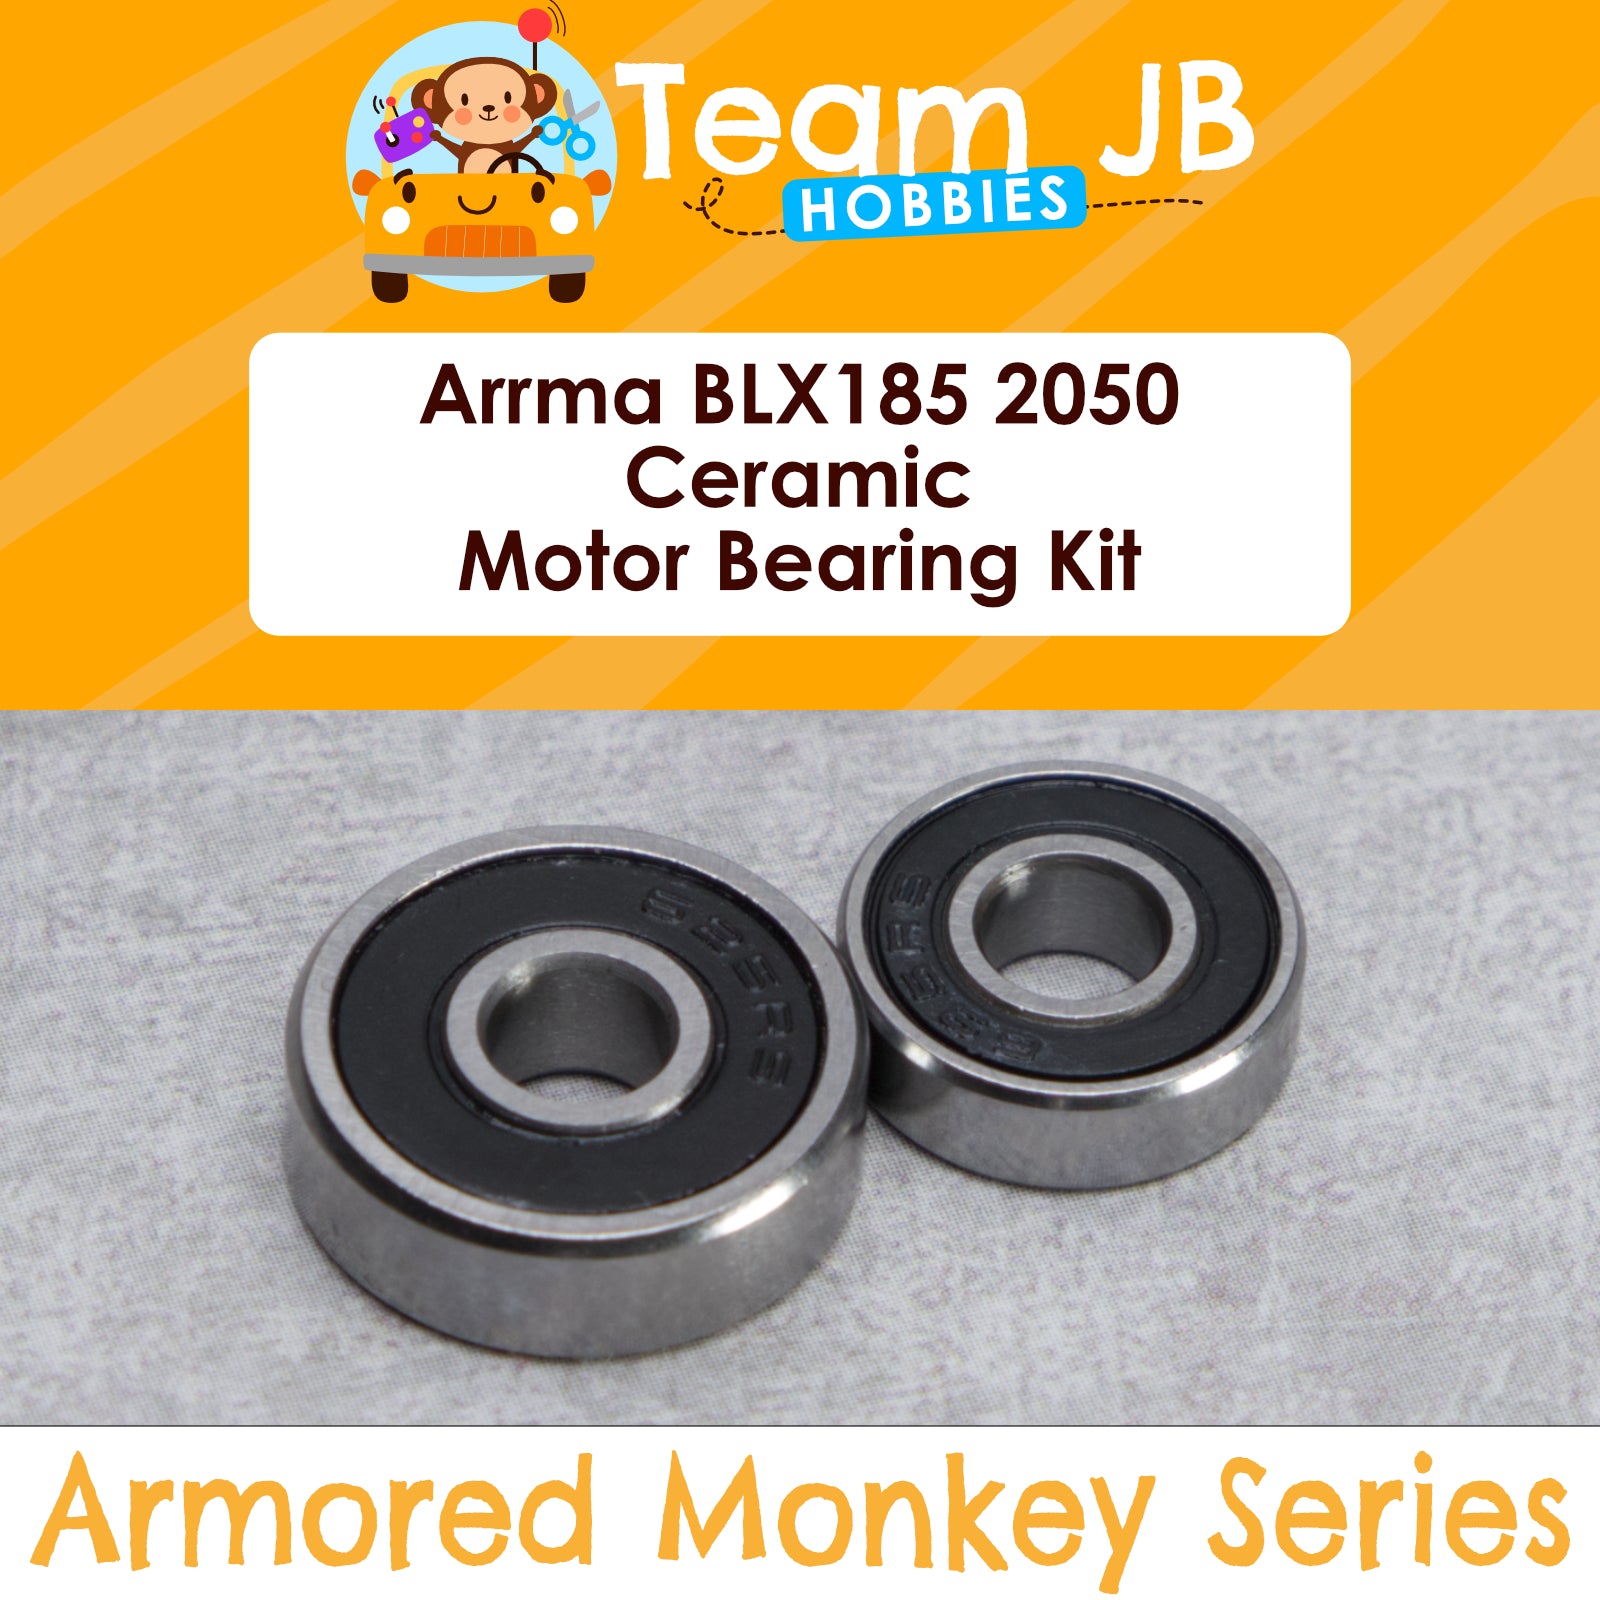 Bearing Kits - Arrma